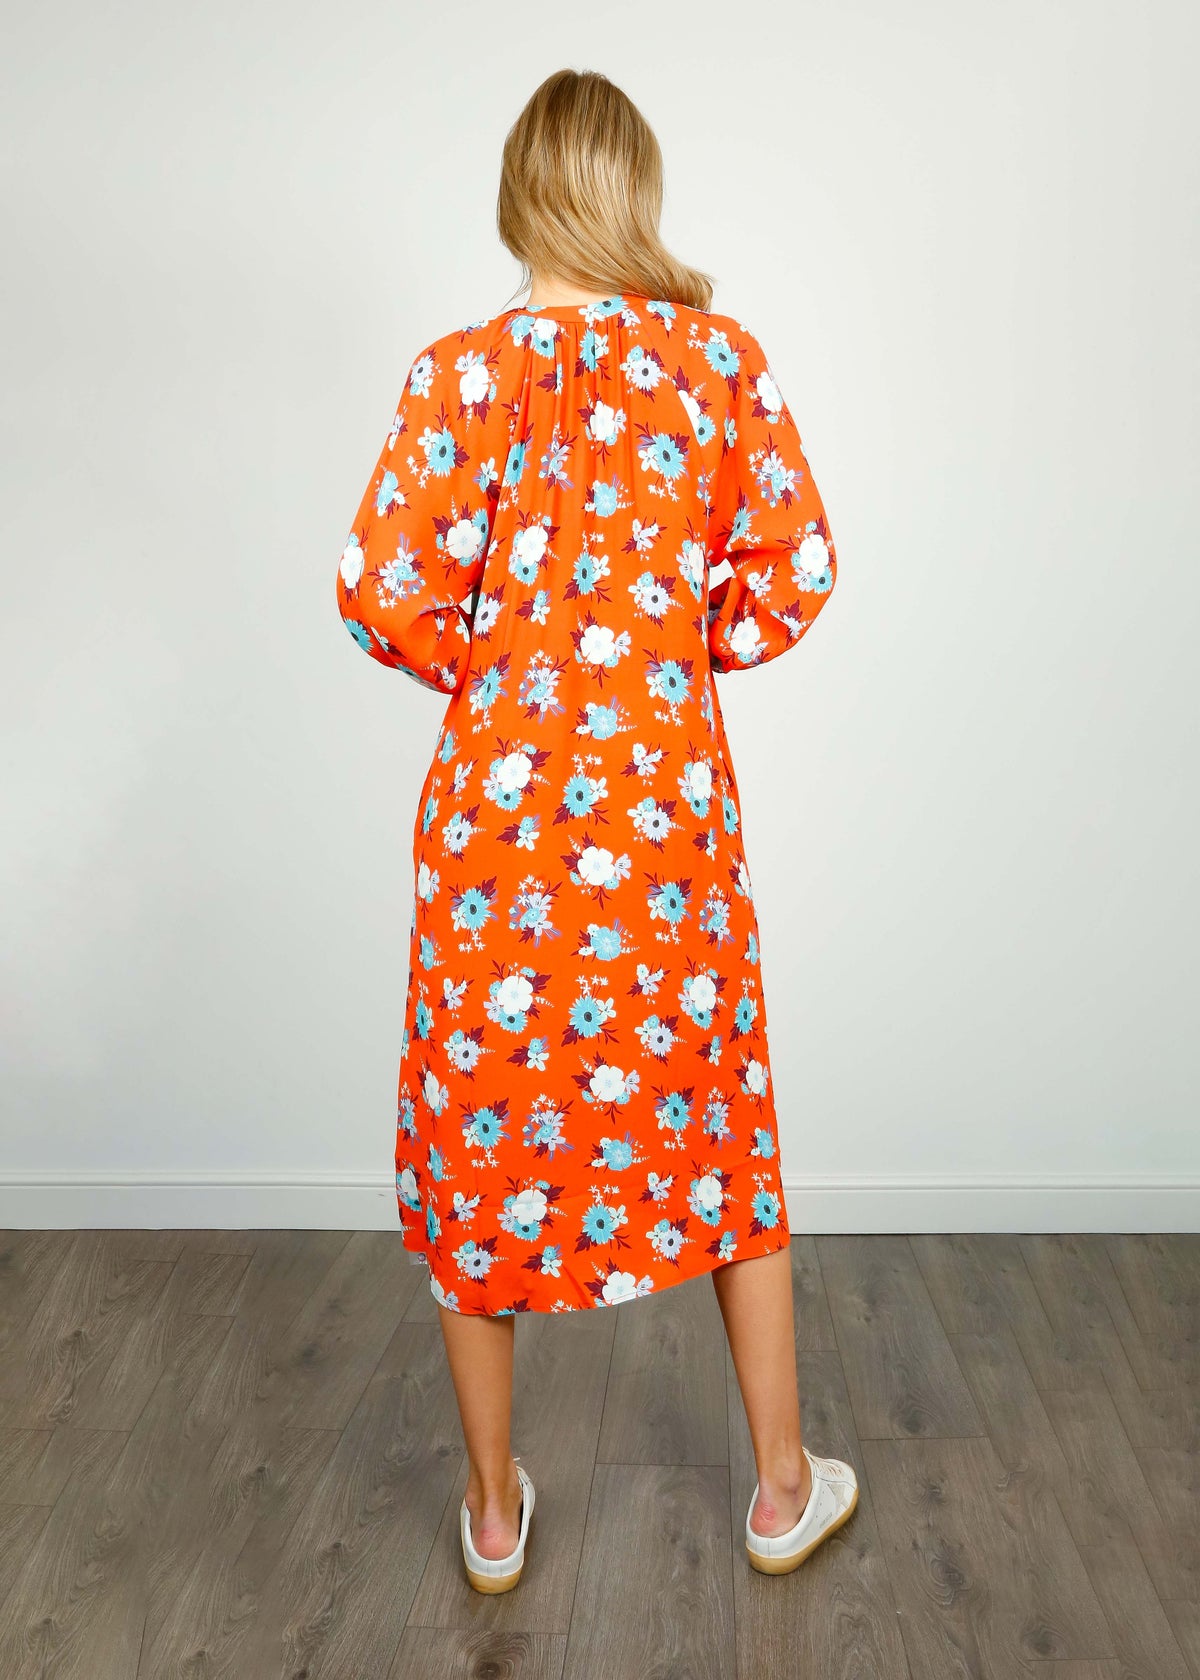 PPL Zion Dress in Blooms 02 Orange